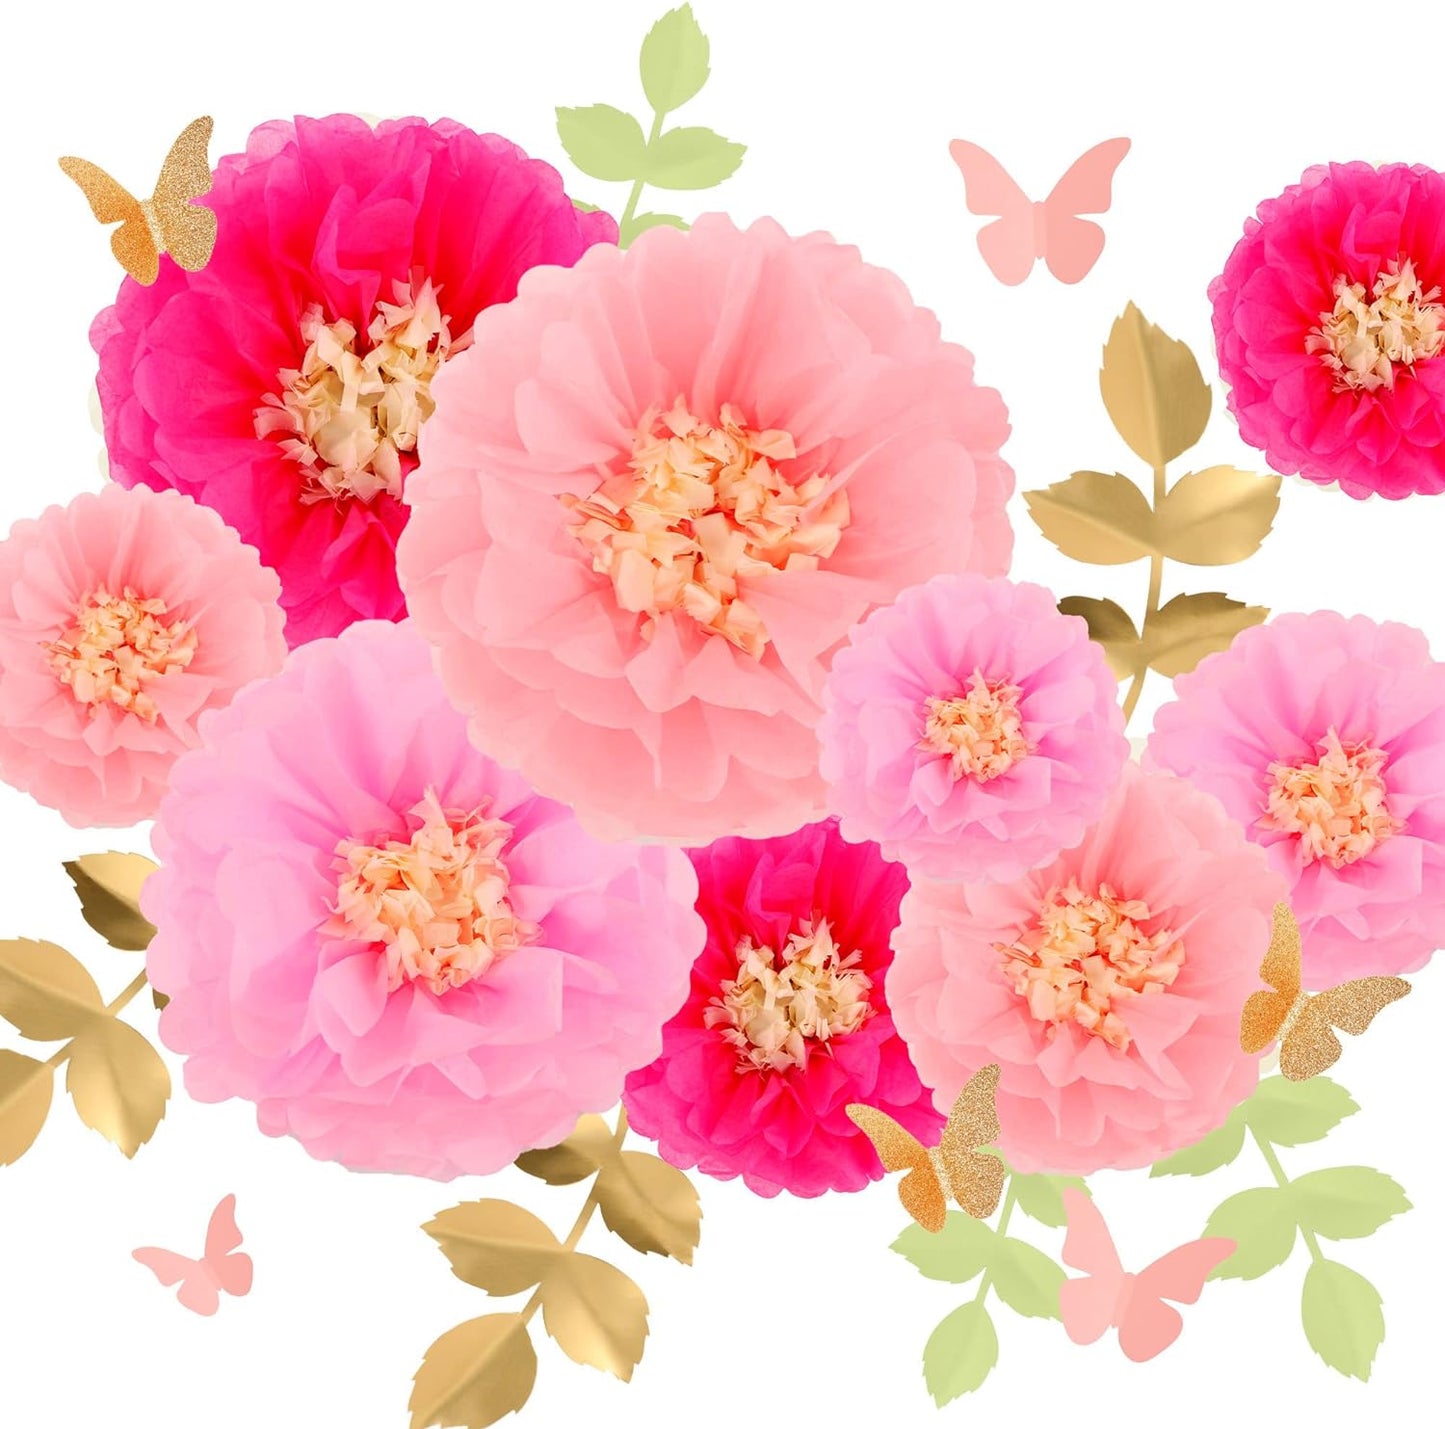 Fonder Mols Pink Tissue Paper Flowers Tissue Pom Poms Blooms Decorations (Set of 21, Rose Pink)